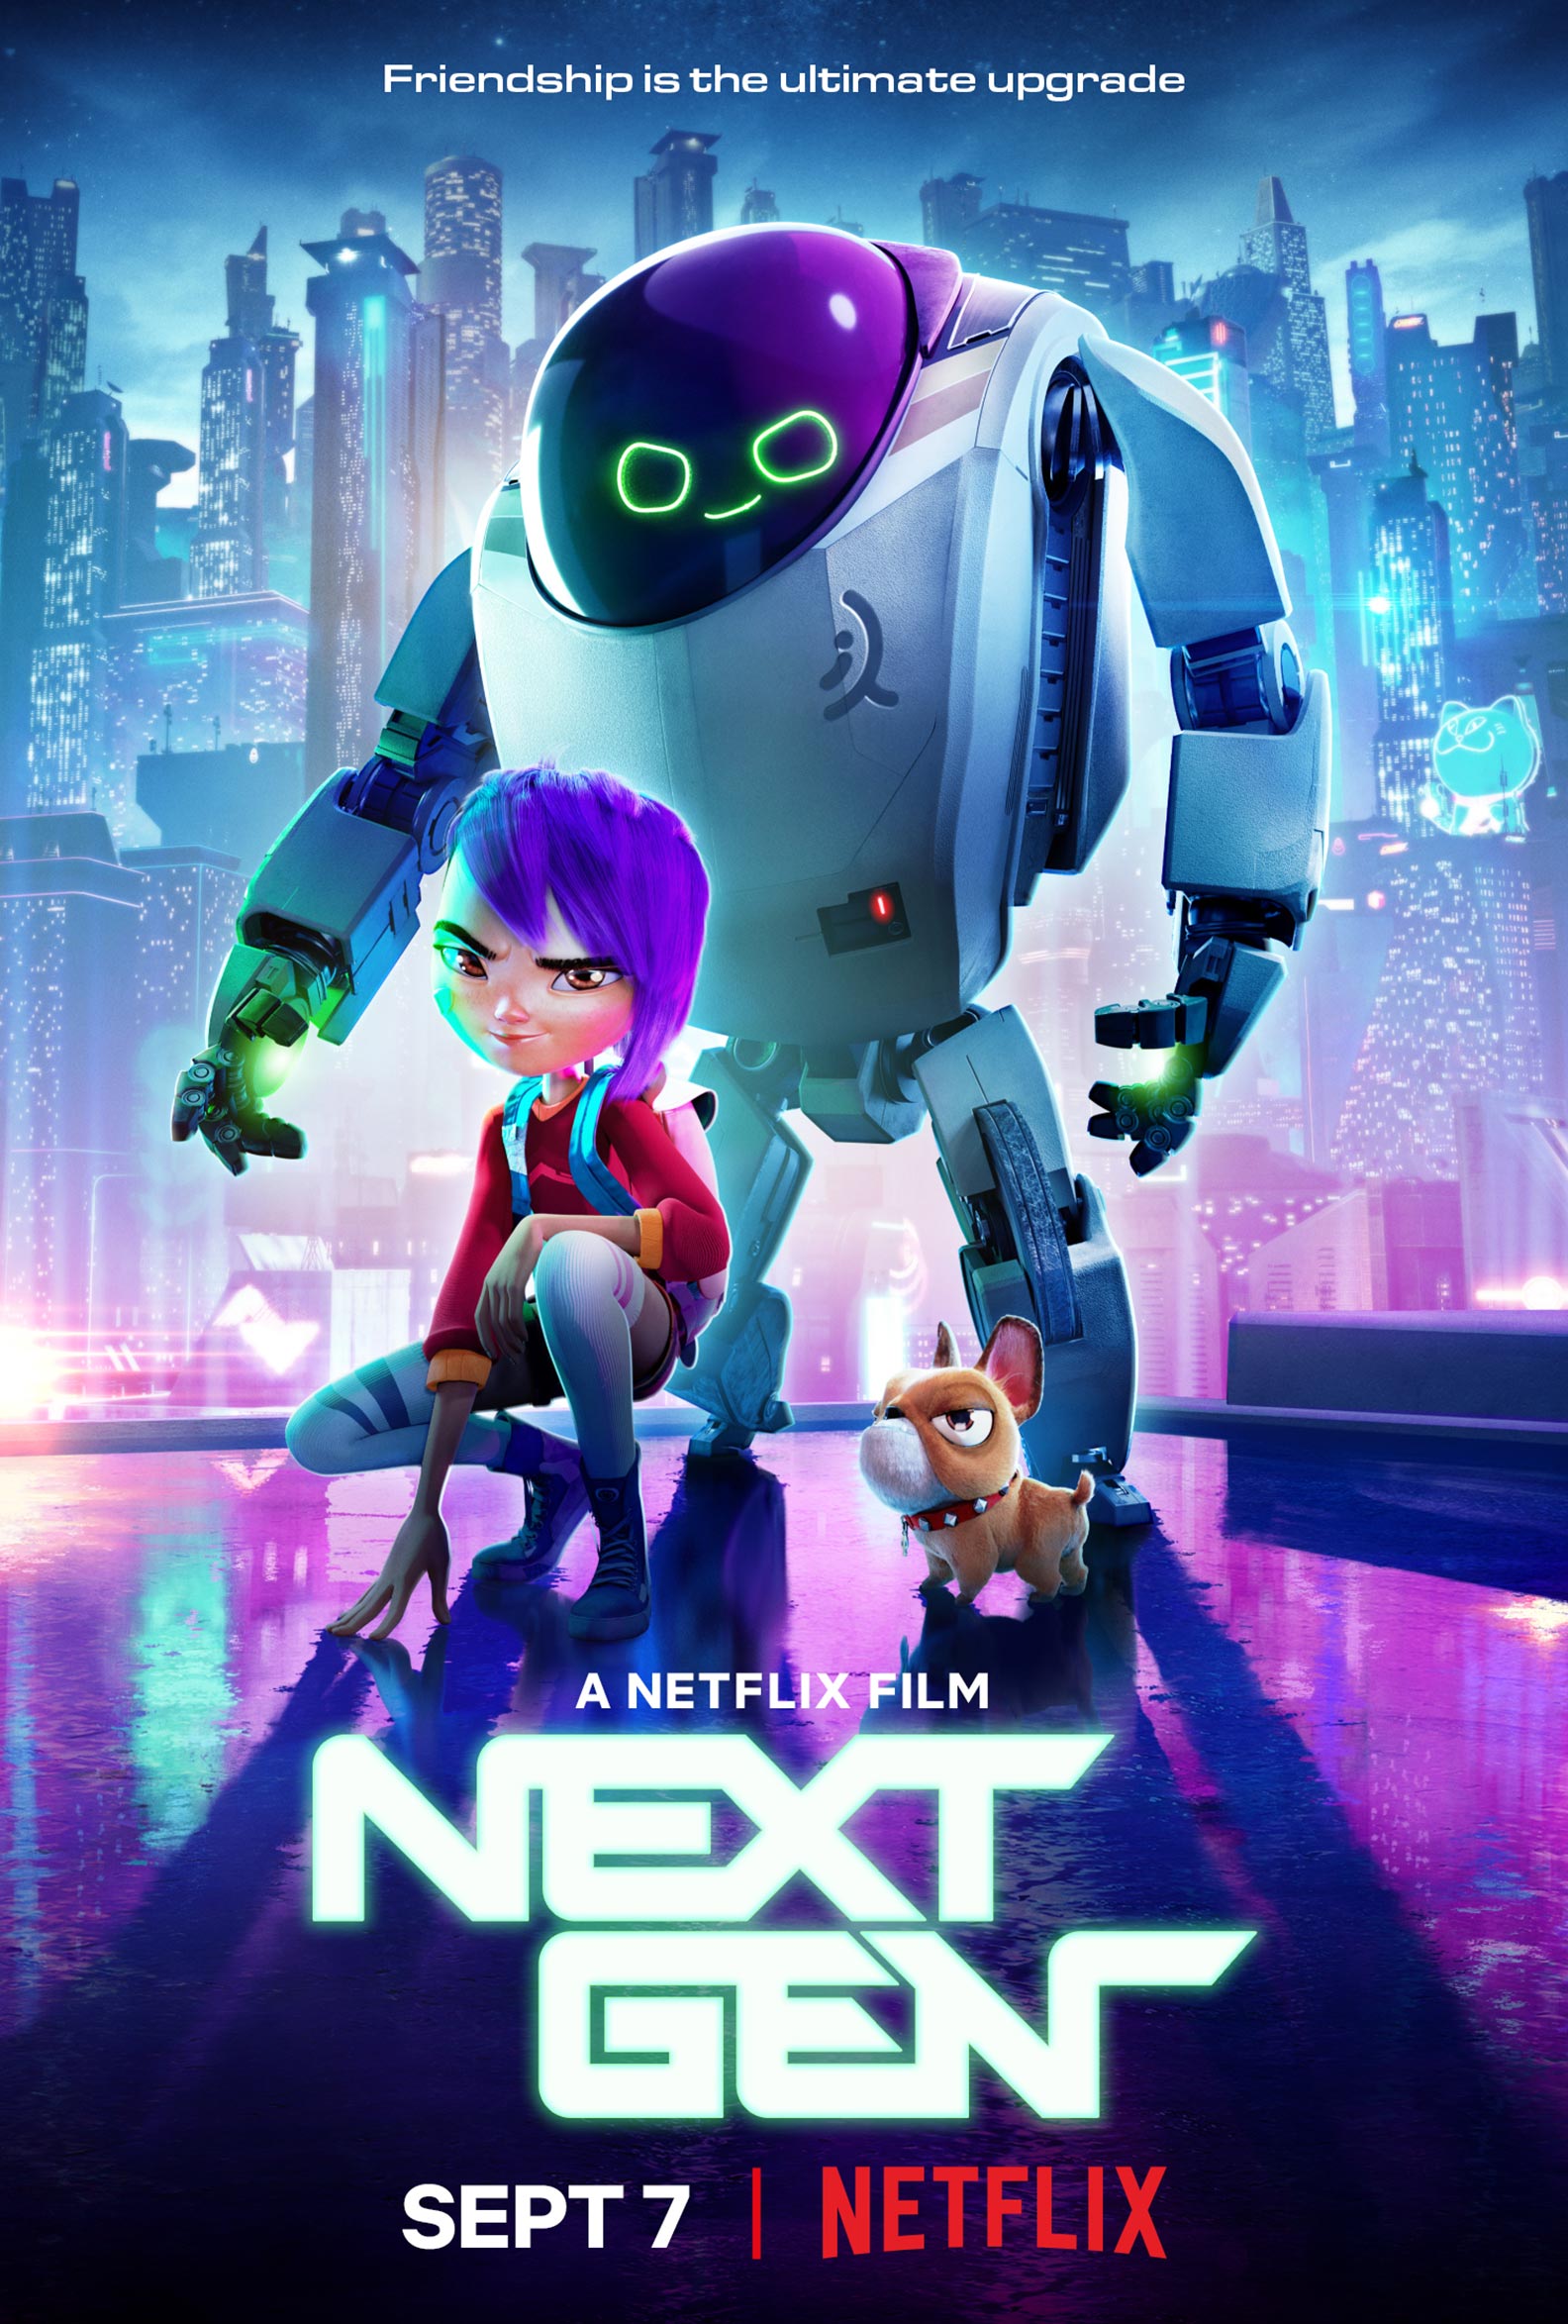 new netflix movies november 2018